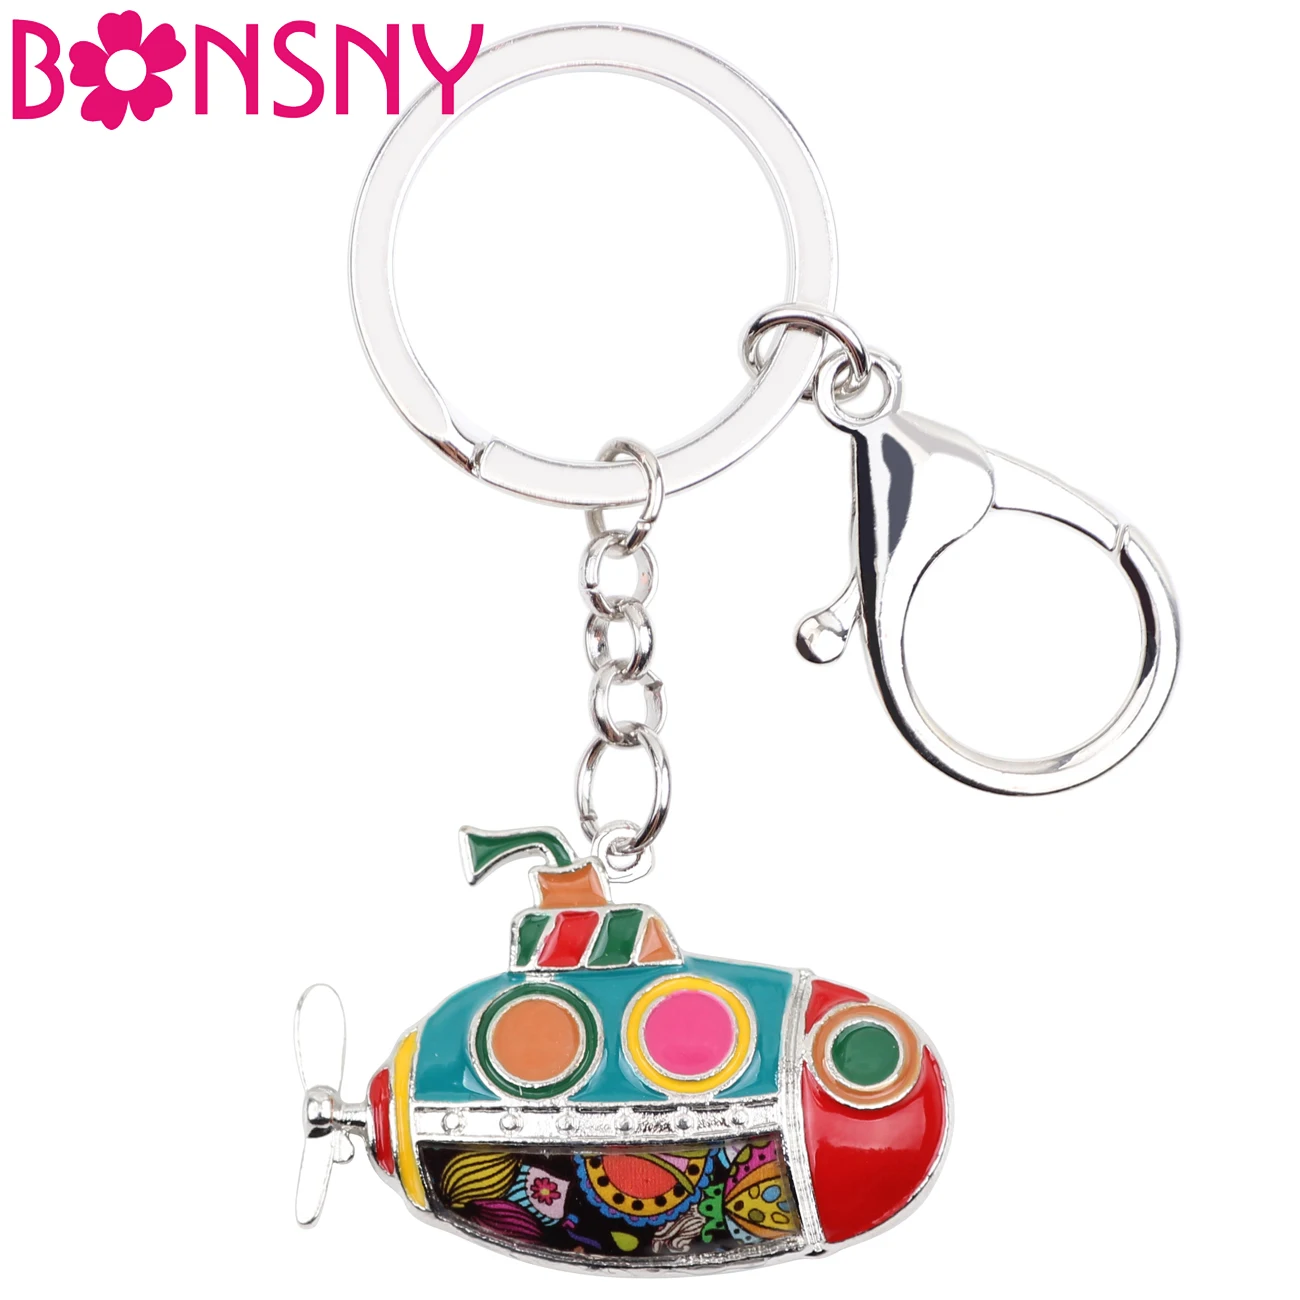 

Bonsny Enamel Alloy Submarine Key Chain Key Ring Handbag Bag Charm Keychain Souvenir New Fashion Ocean Jewelry For Women